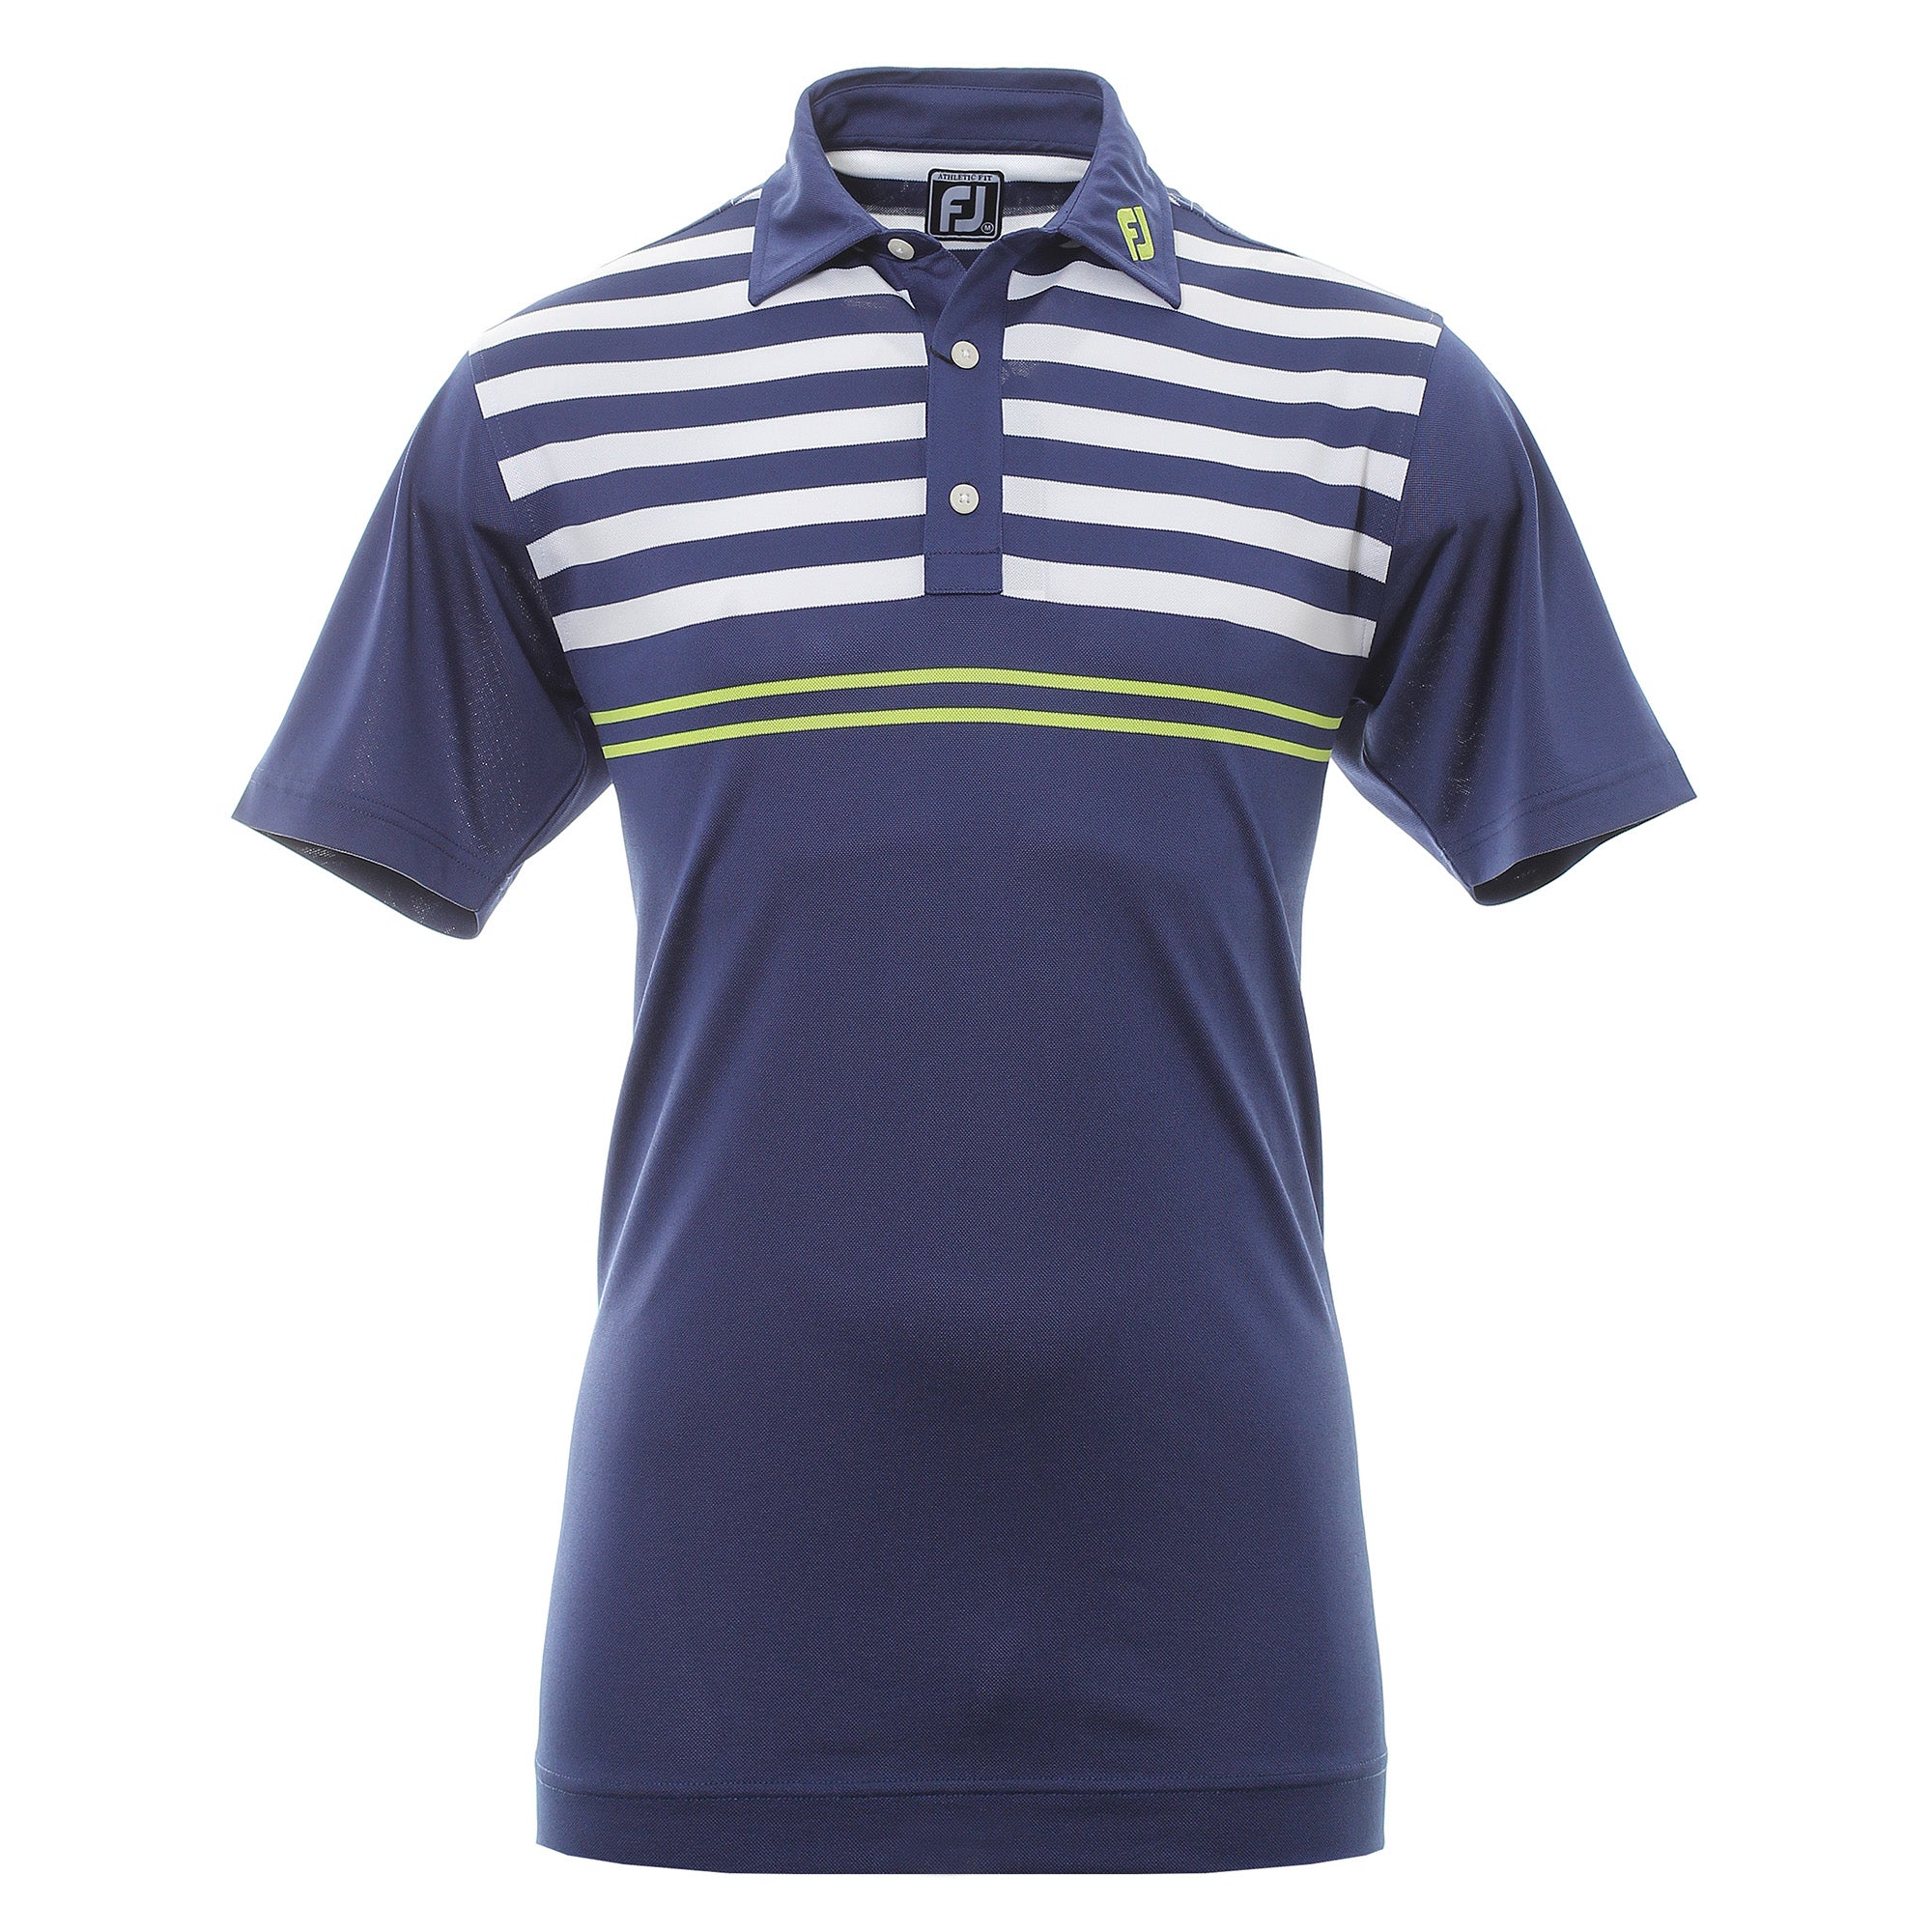 FootJoy Graphic Chest Stripe Golf Shirt 90024 Twilight White Citrus ...